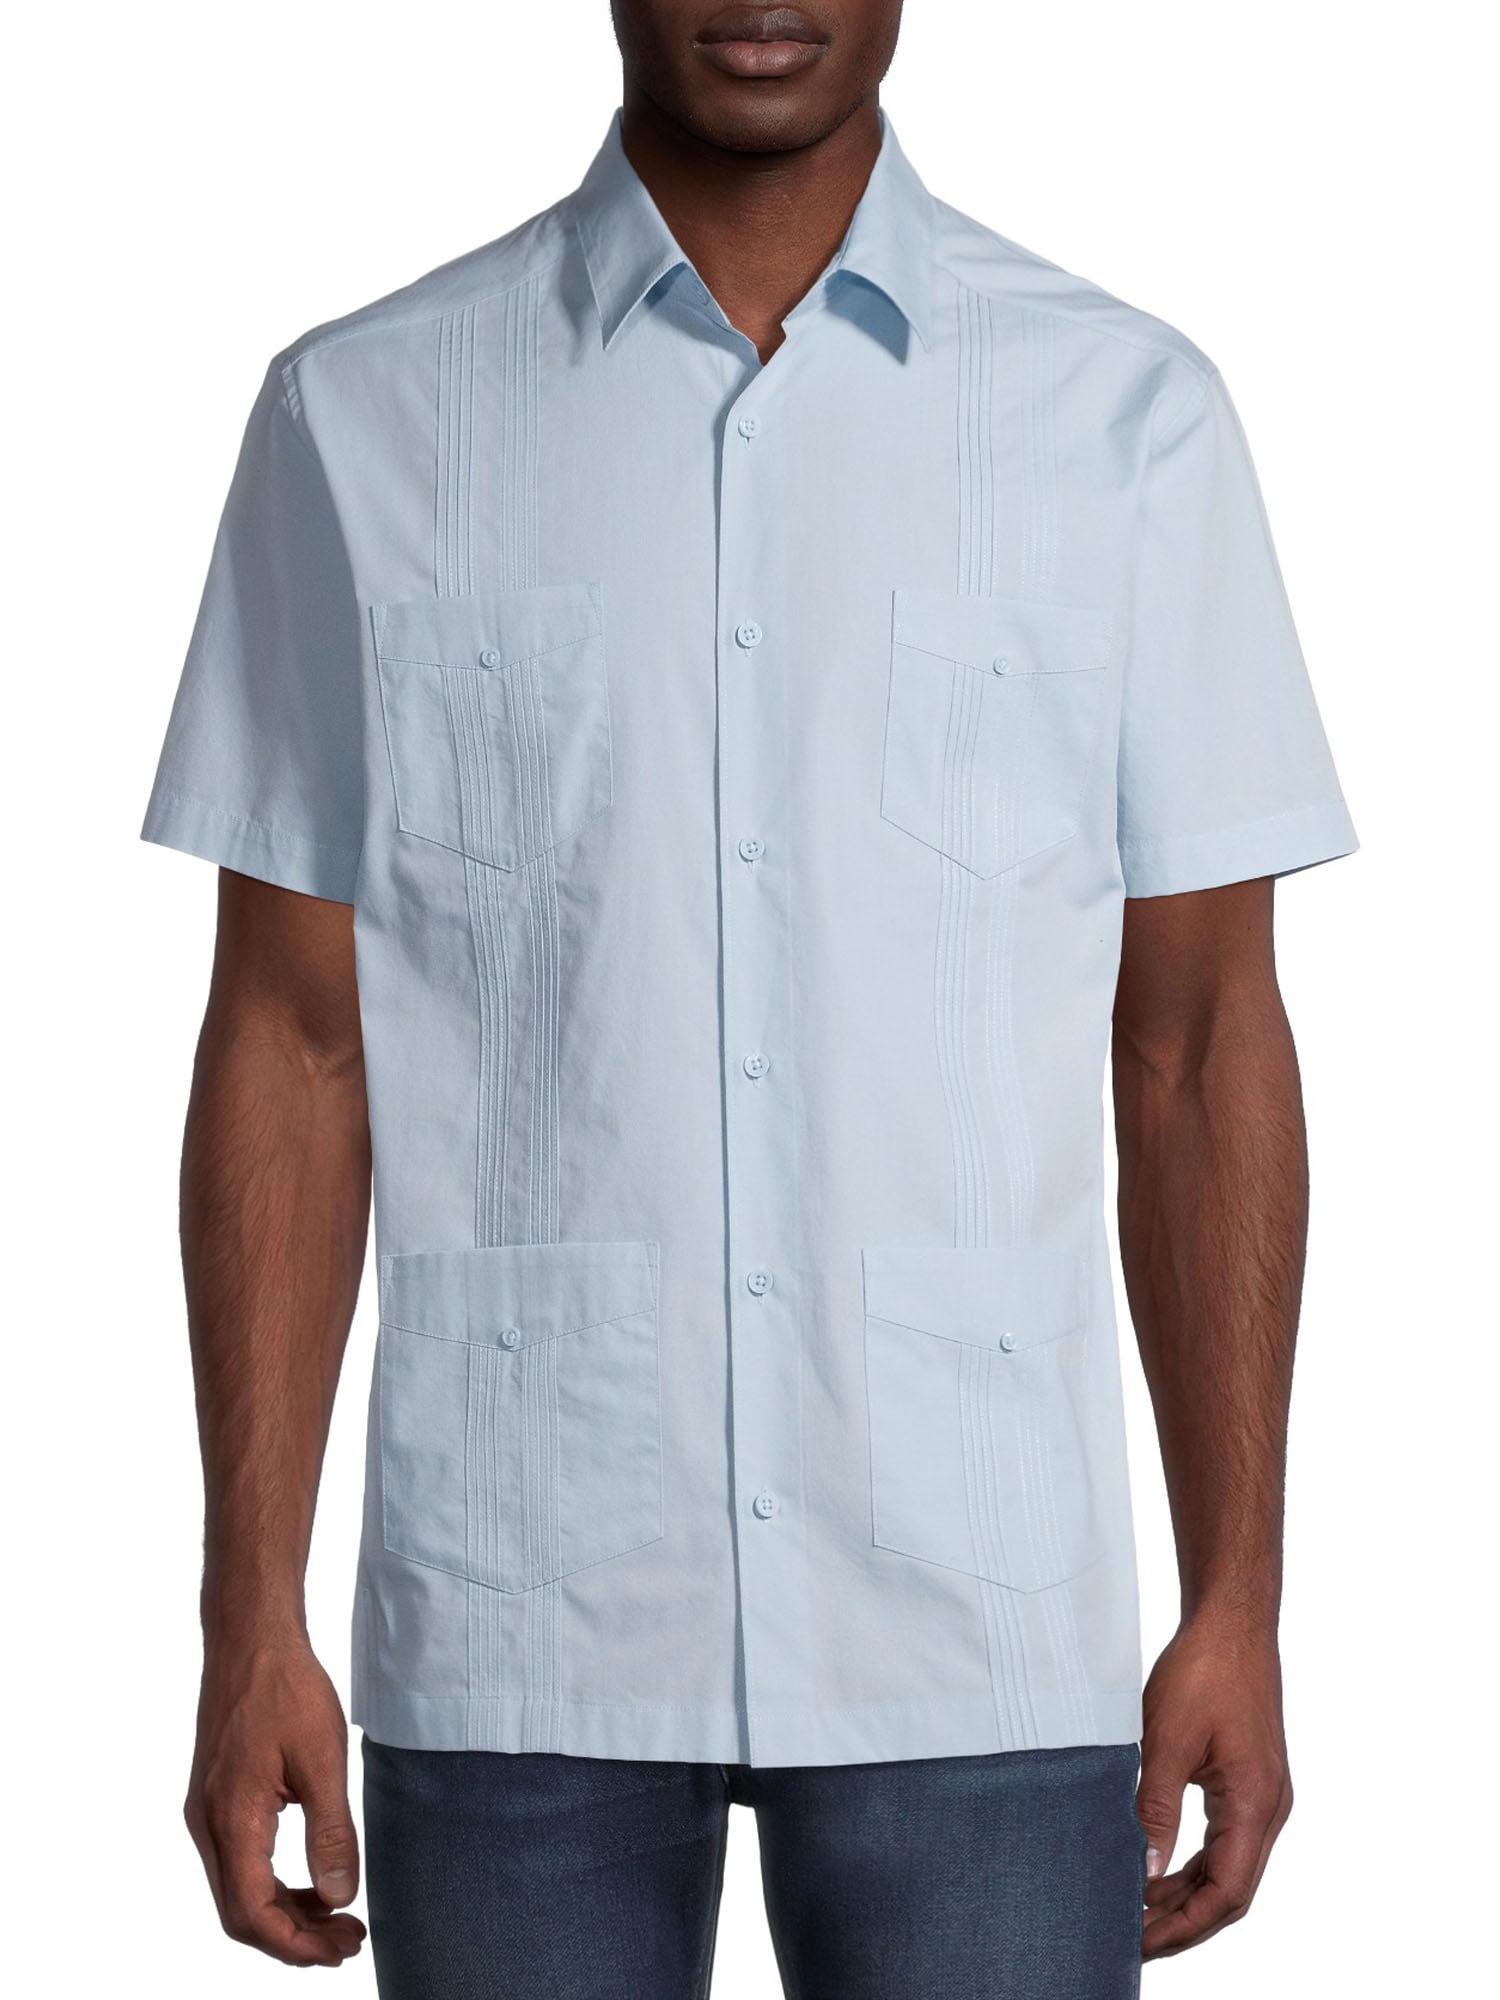 NEMT112 NE PEOPLE Men's Short Sleeve Cuban Guayabera Button Down Shirts XS-4XL